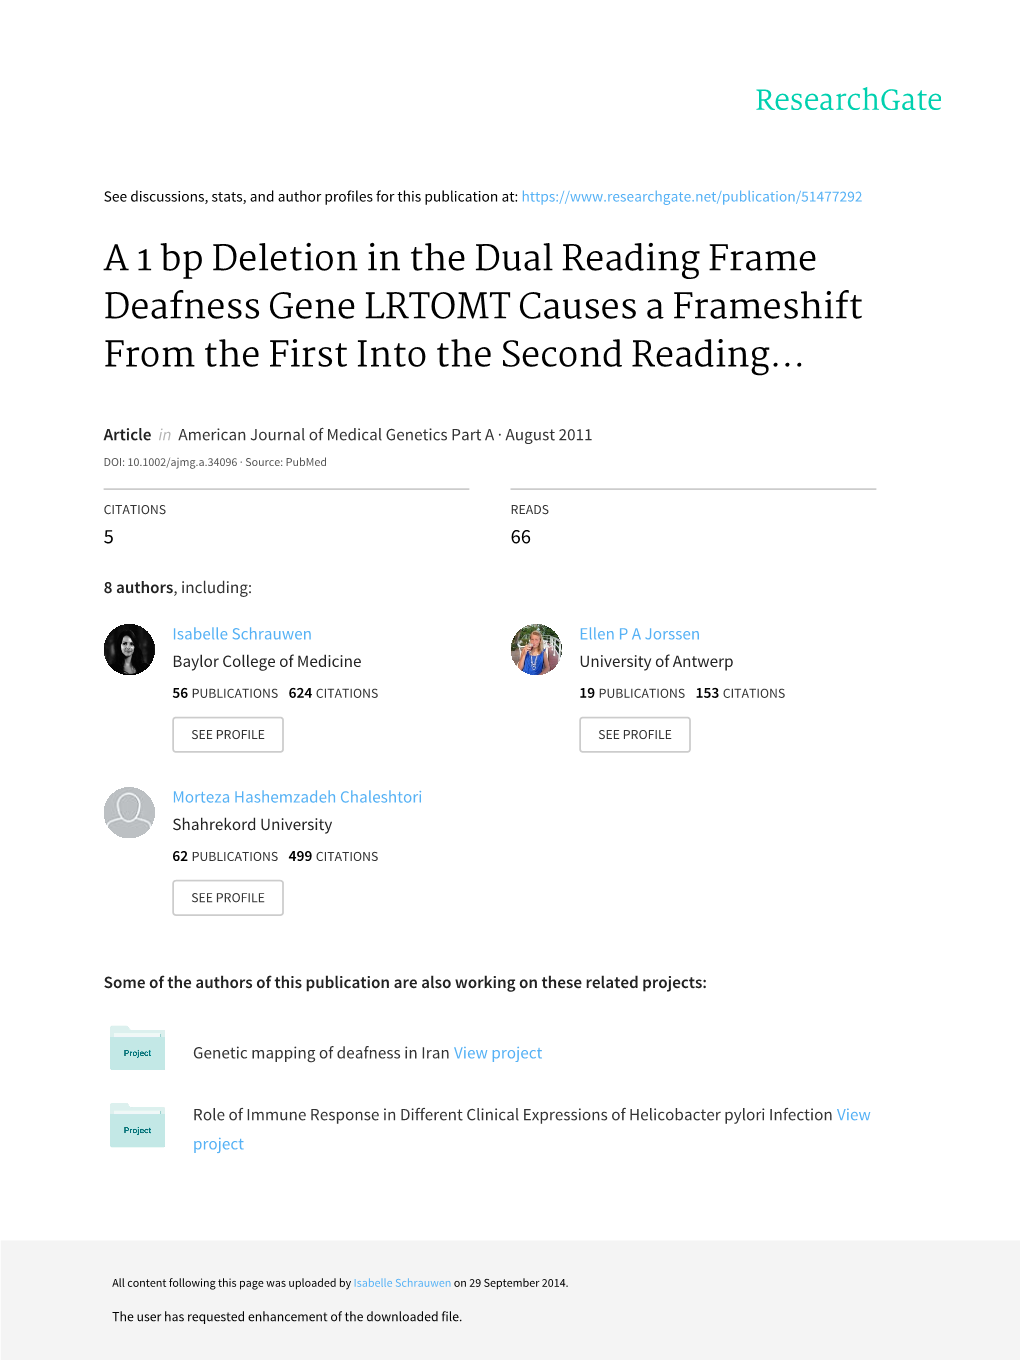 A 1Bp Deletion in the Dual Reading Frame Deafness Gene LRTOMT